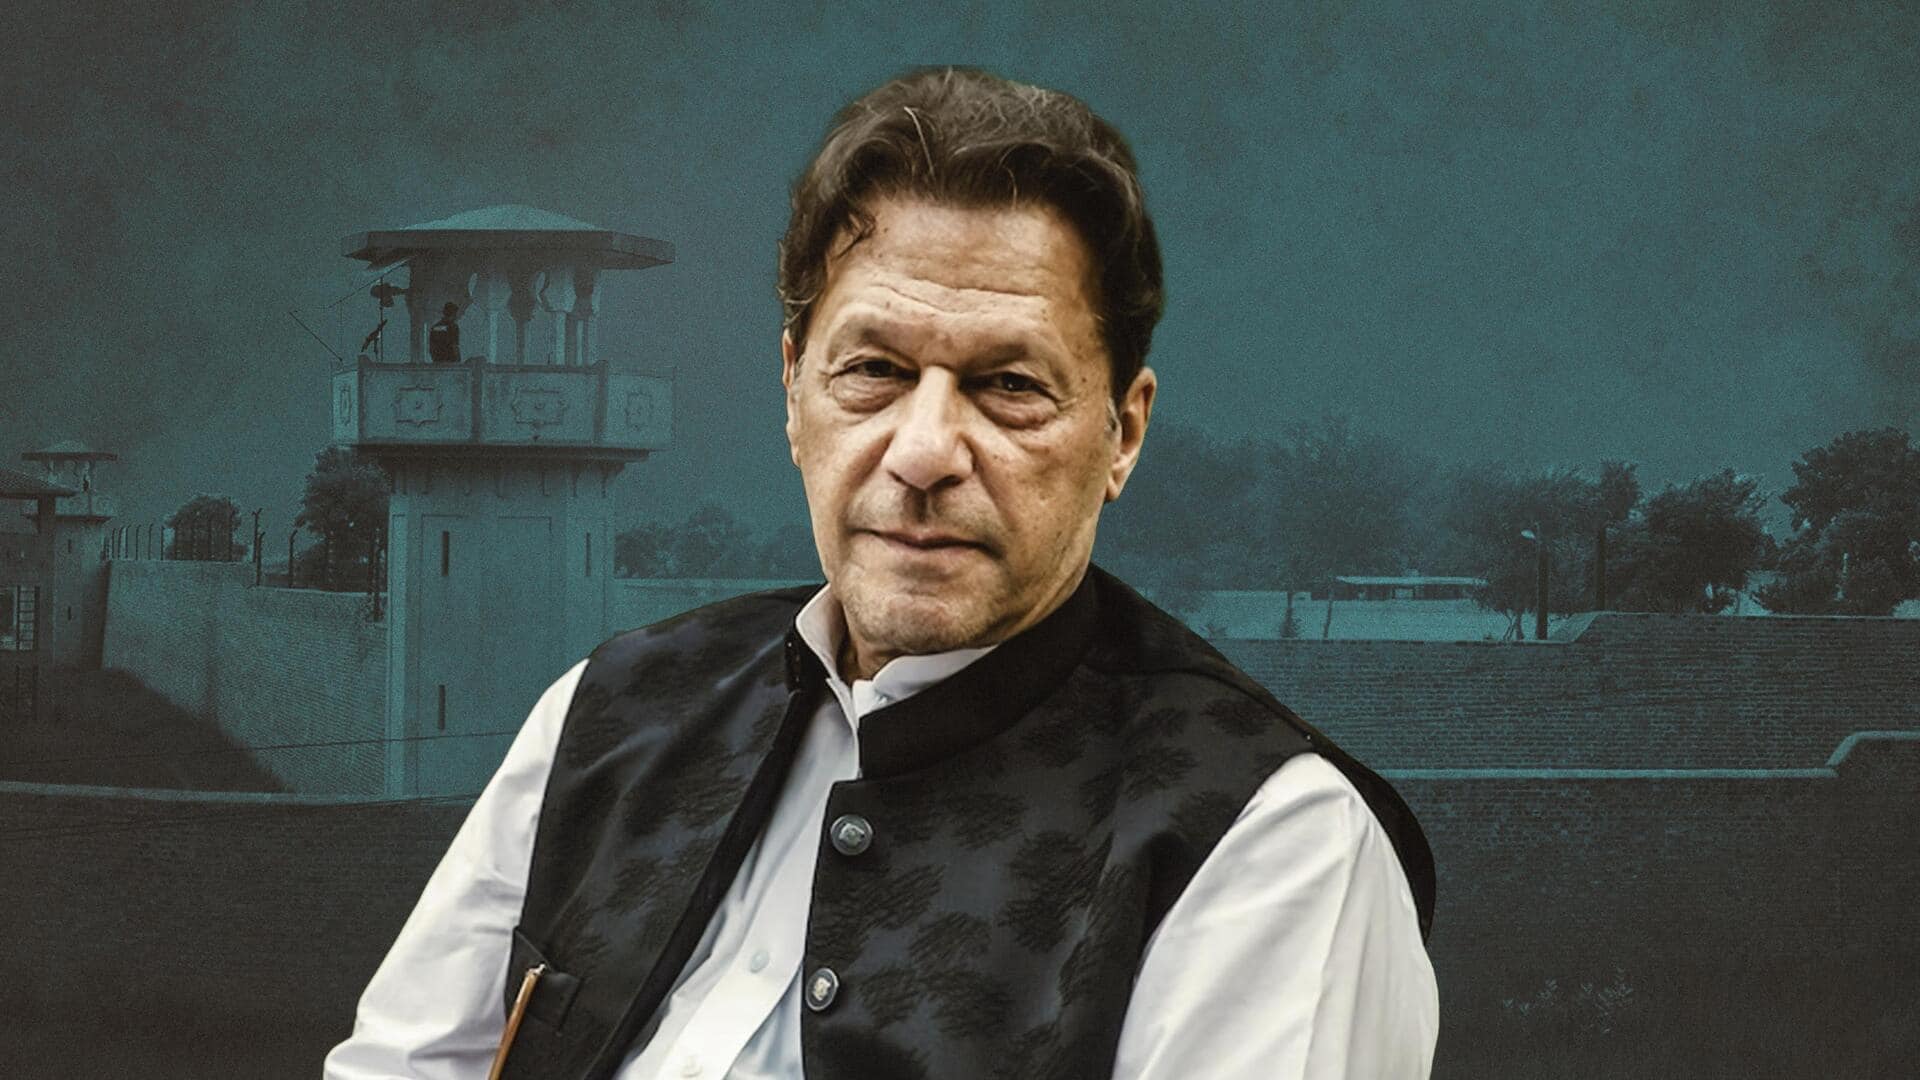 Pakistan: How Imran Khan is coping in jail